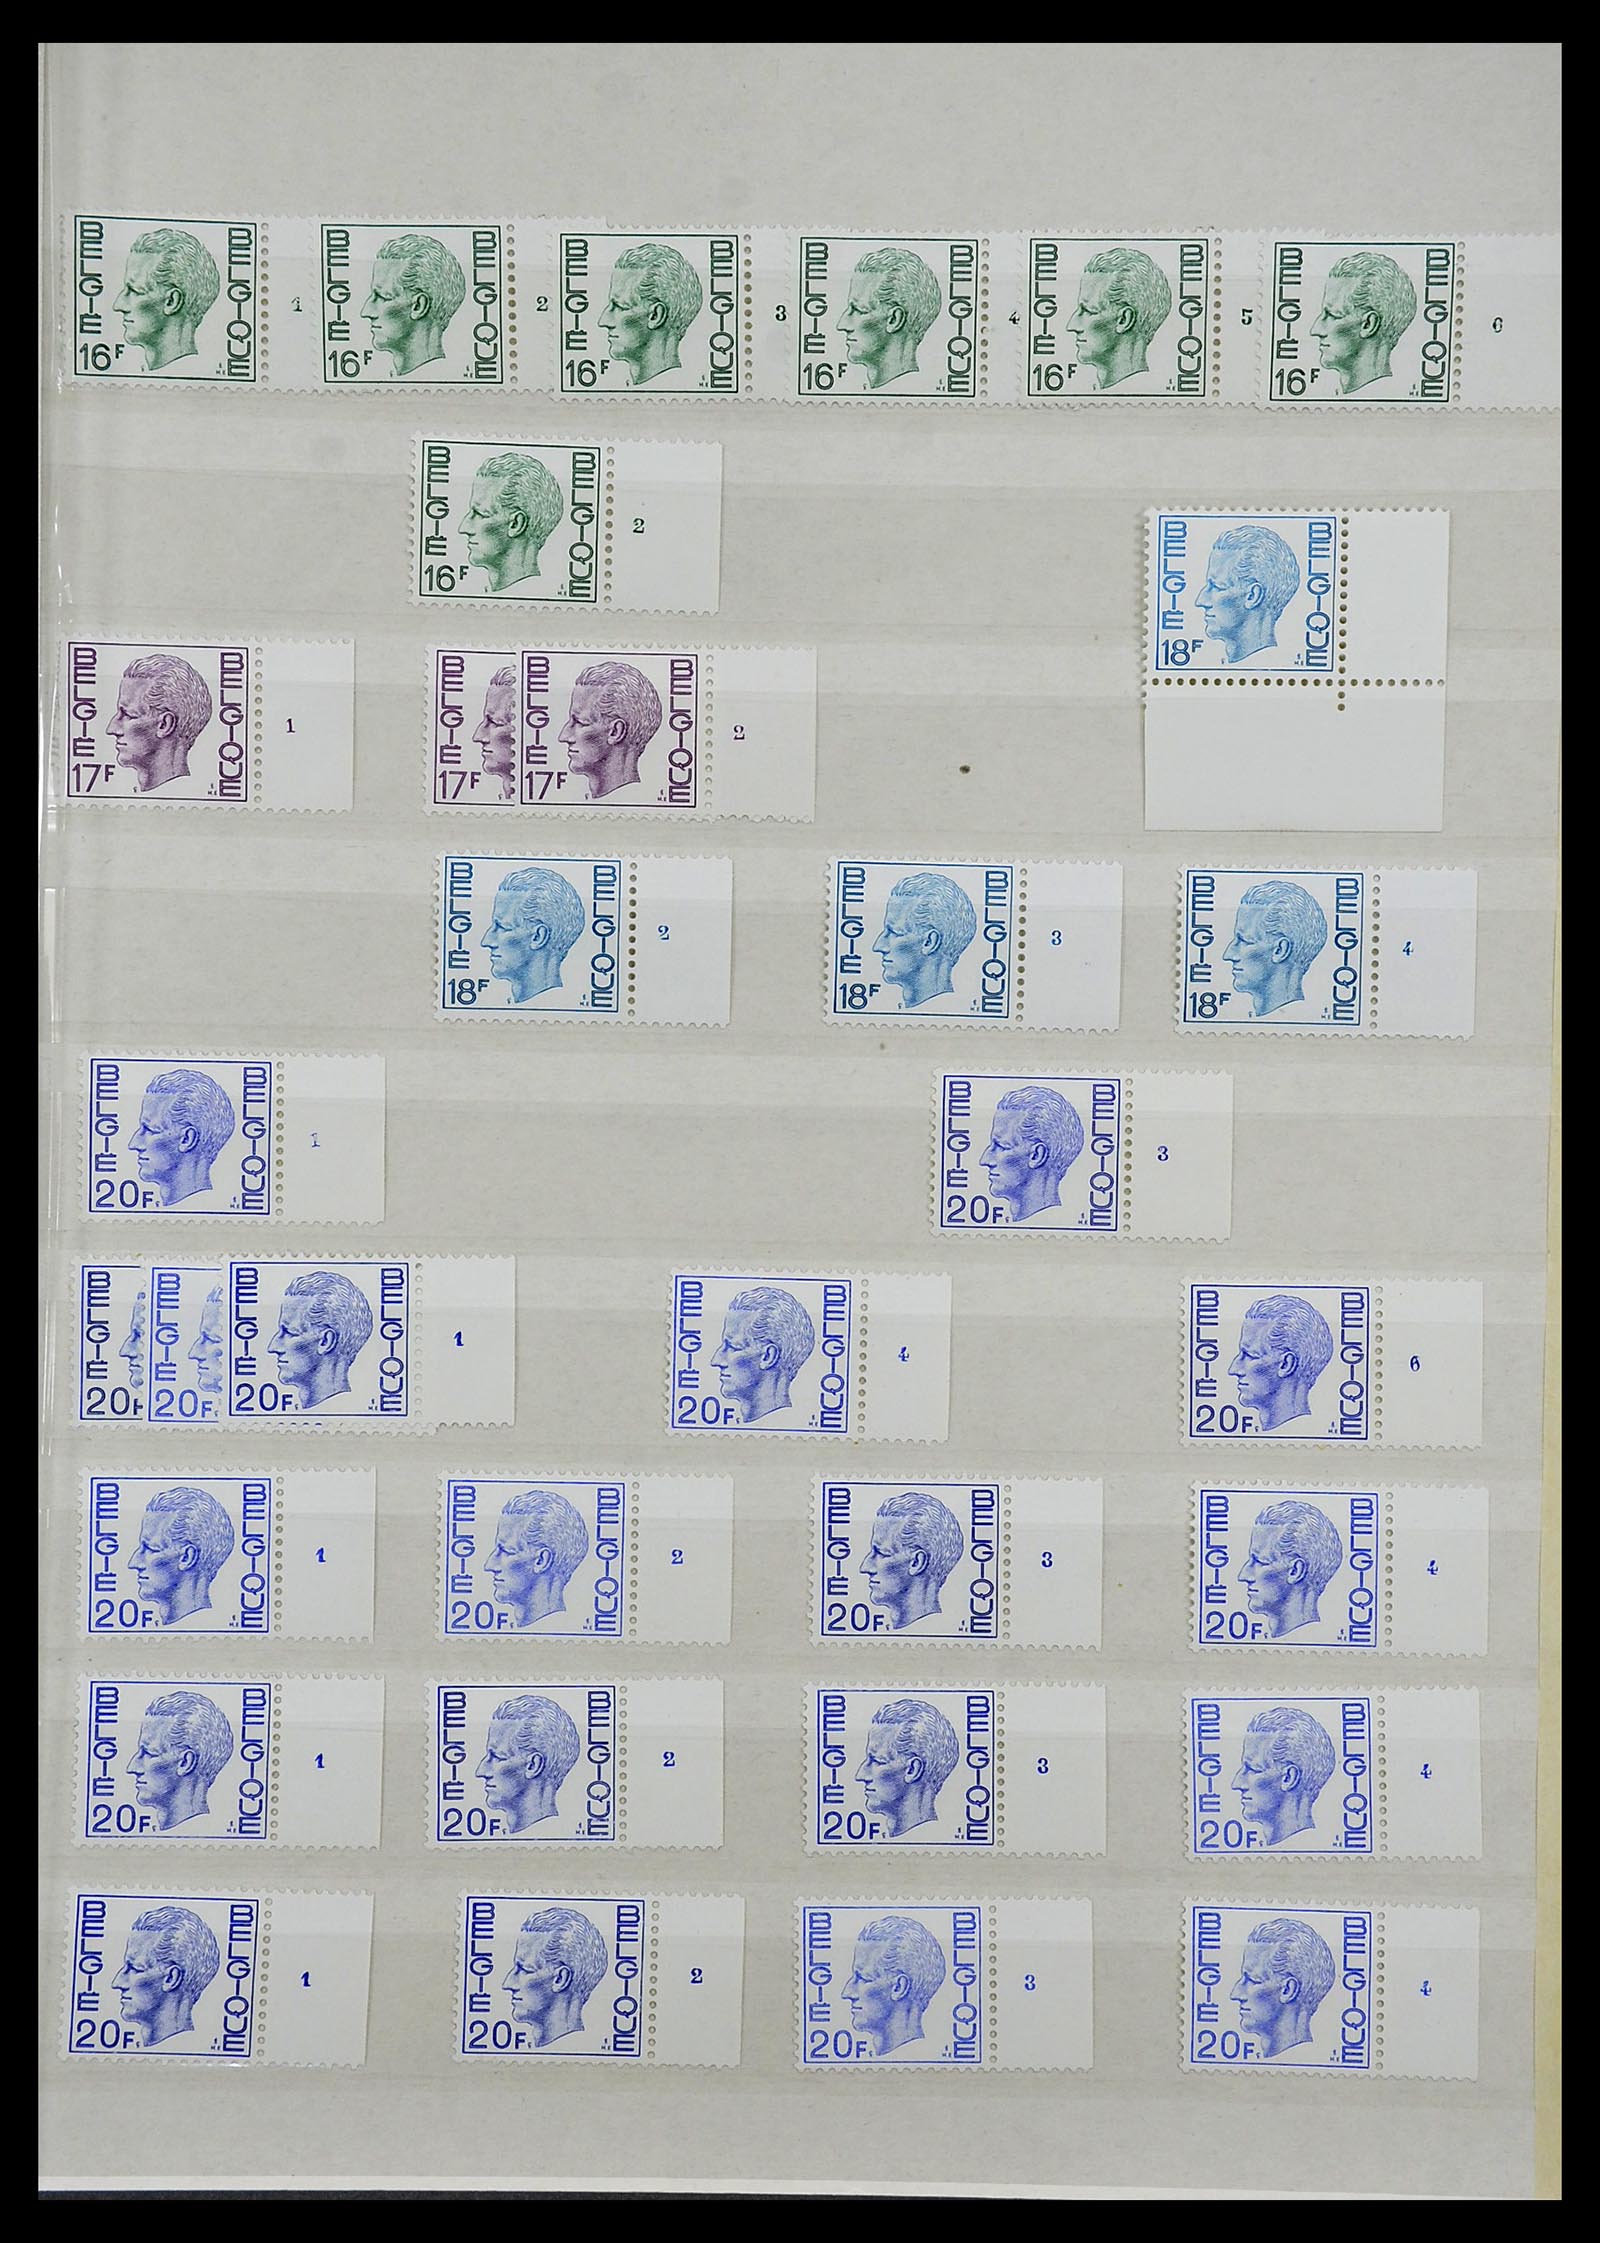 34524 087 - Postzegelverzameling 34524 België plaat en etsingnummers 1963-1990.